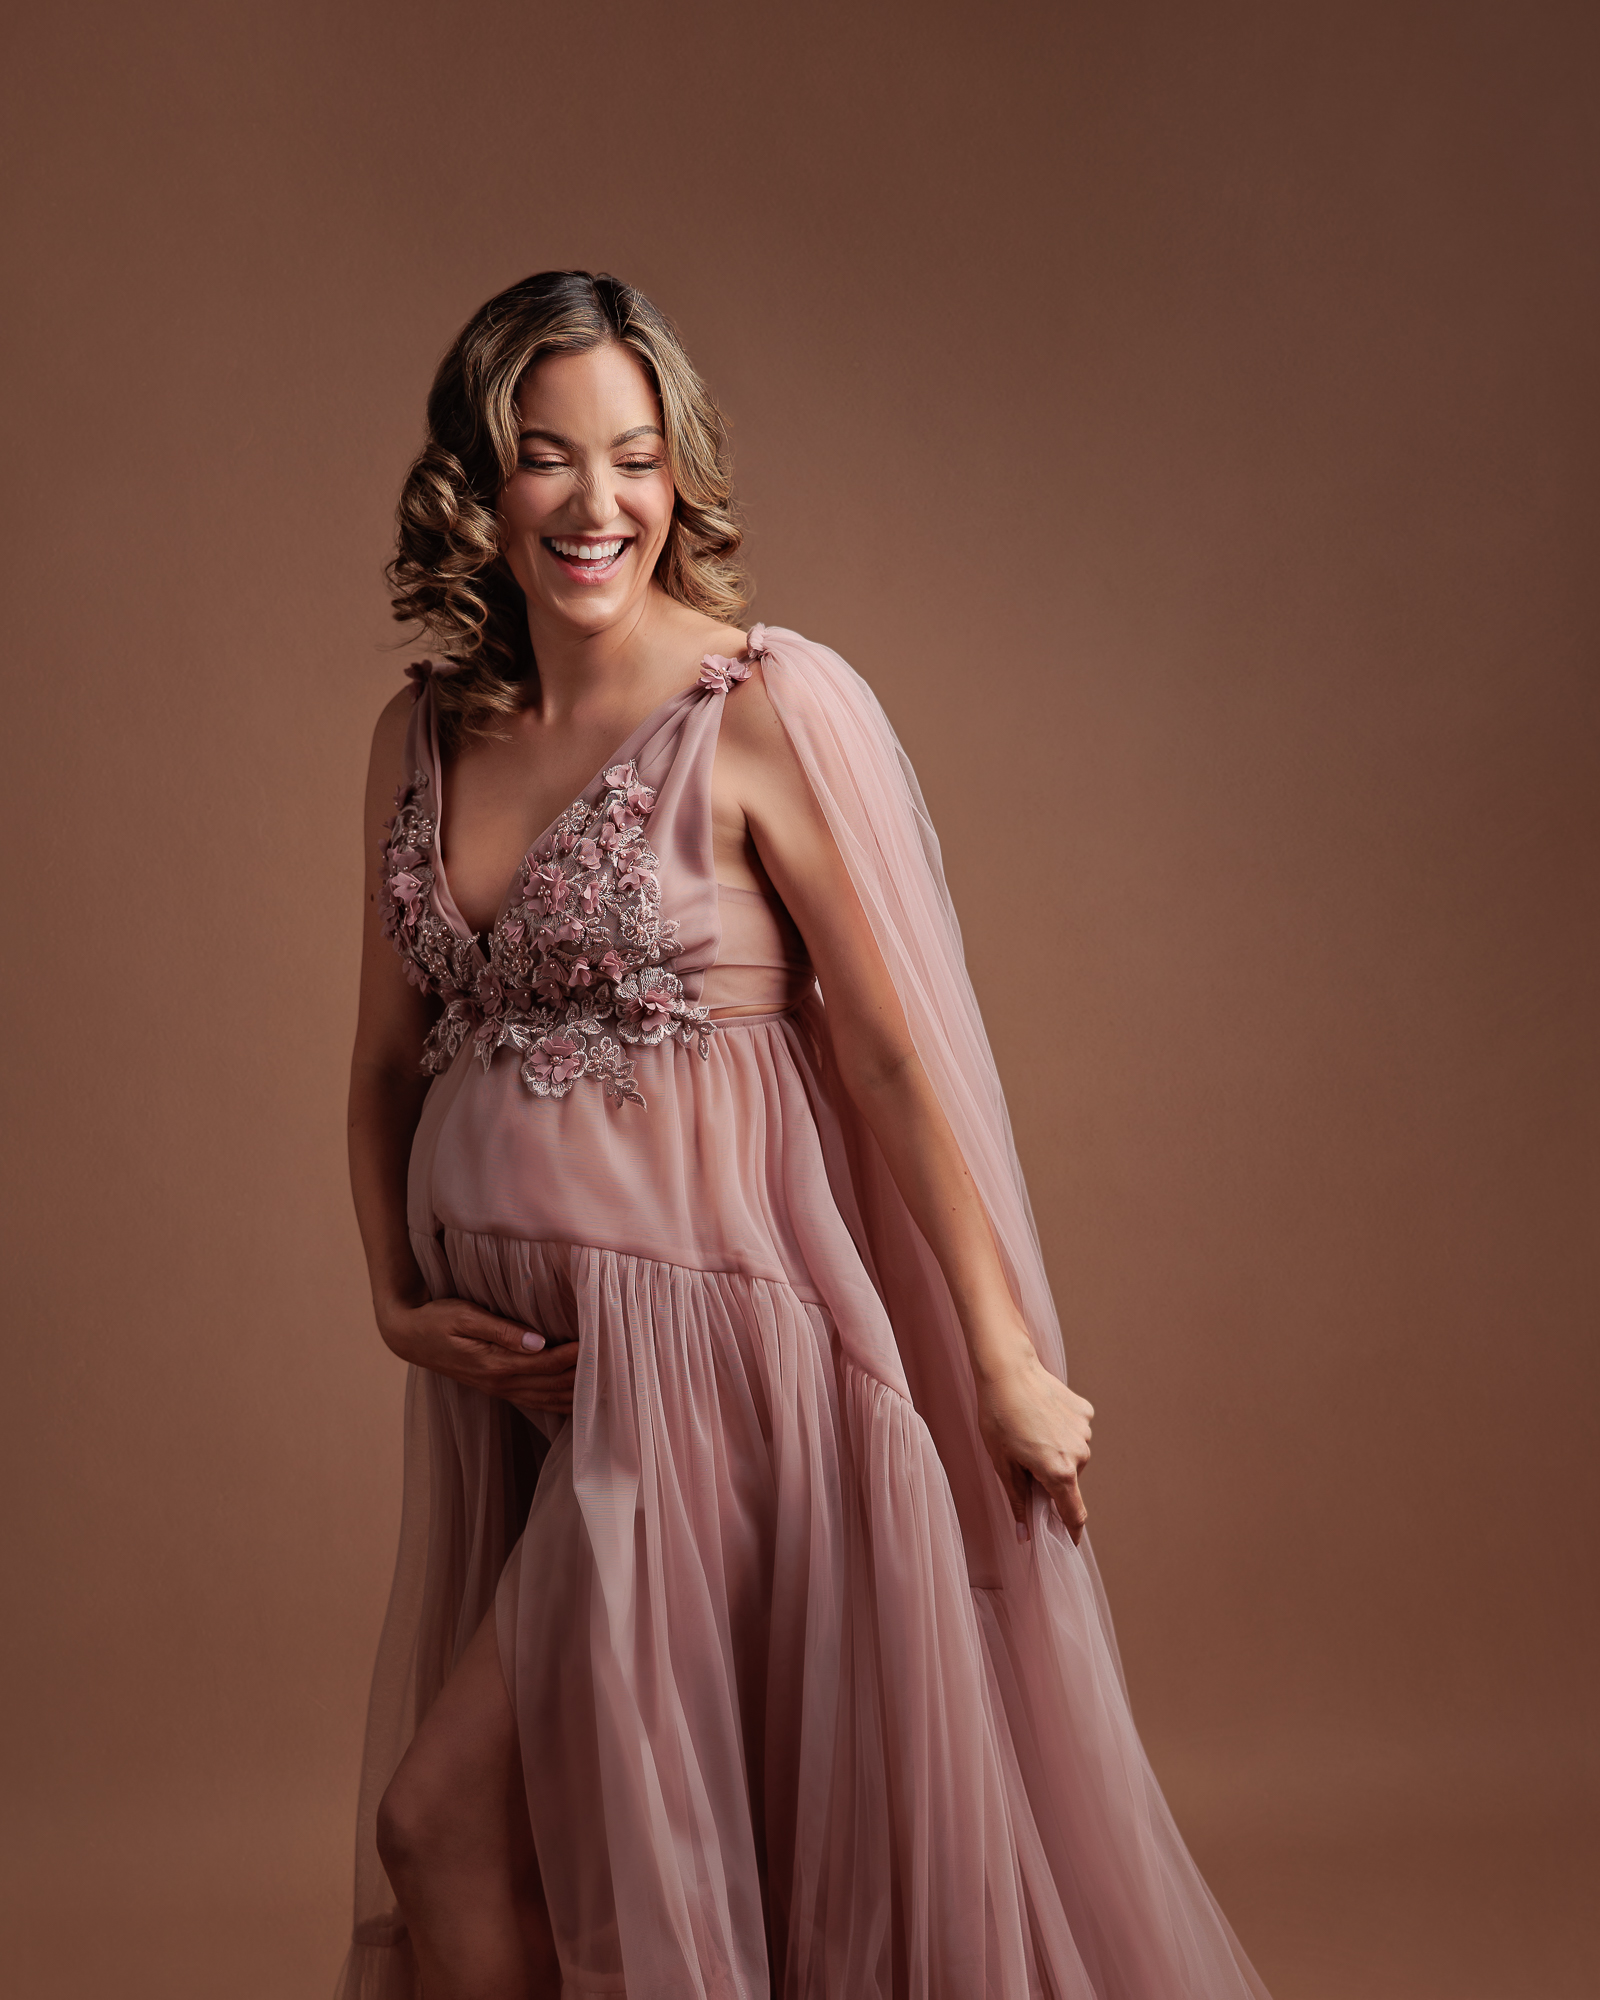 Maternity Photography Calgary Amanda Dams Pink Gown On Mocha Backdrop